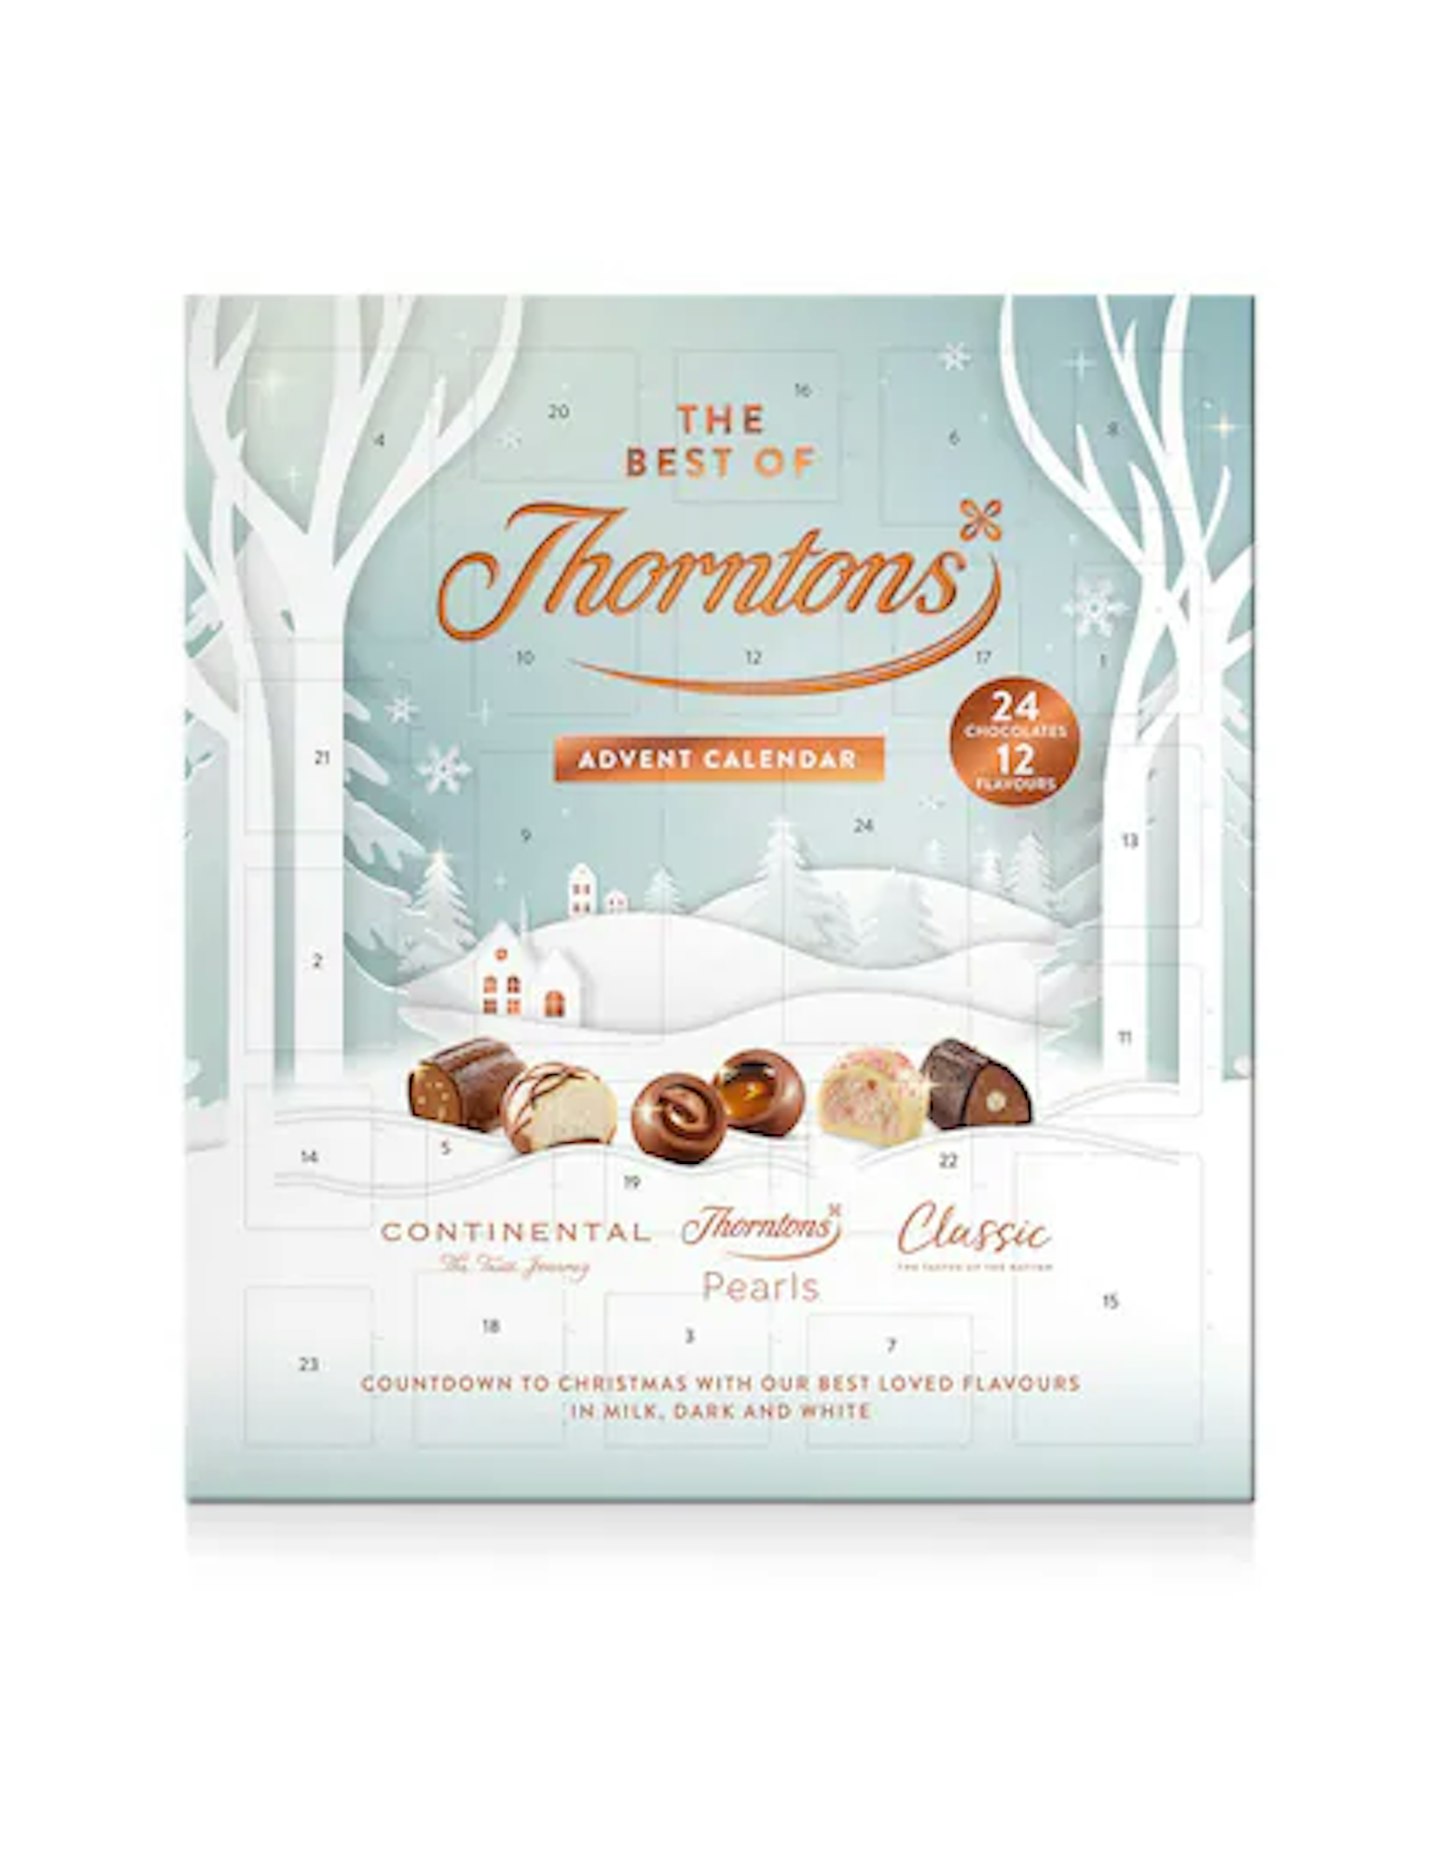 Thorntons family Advent calendars